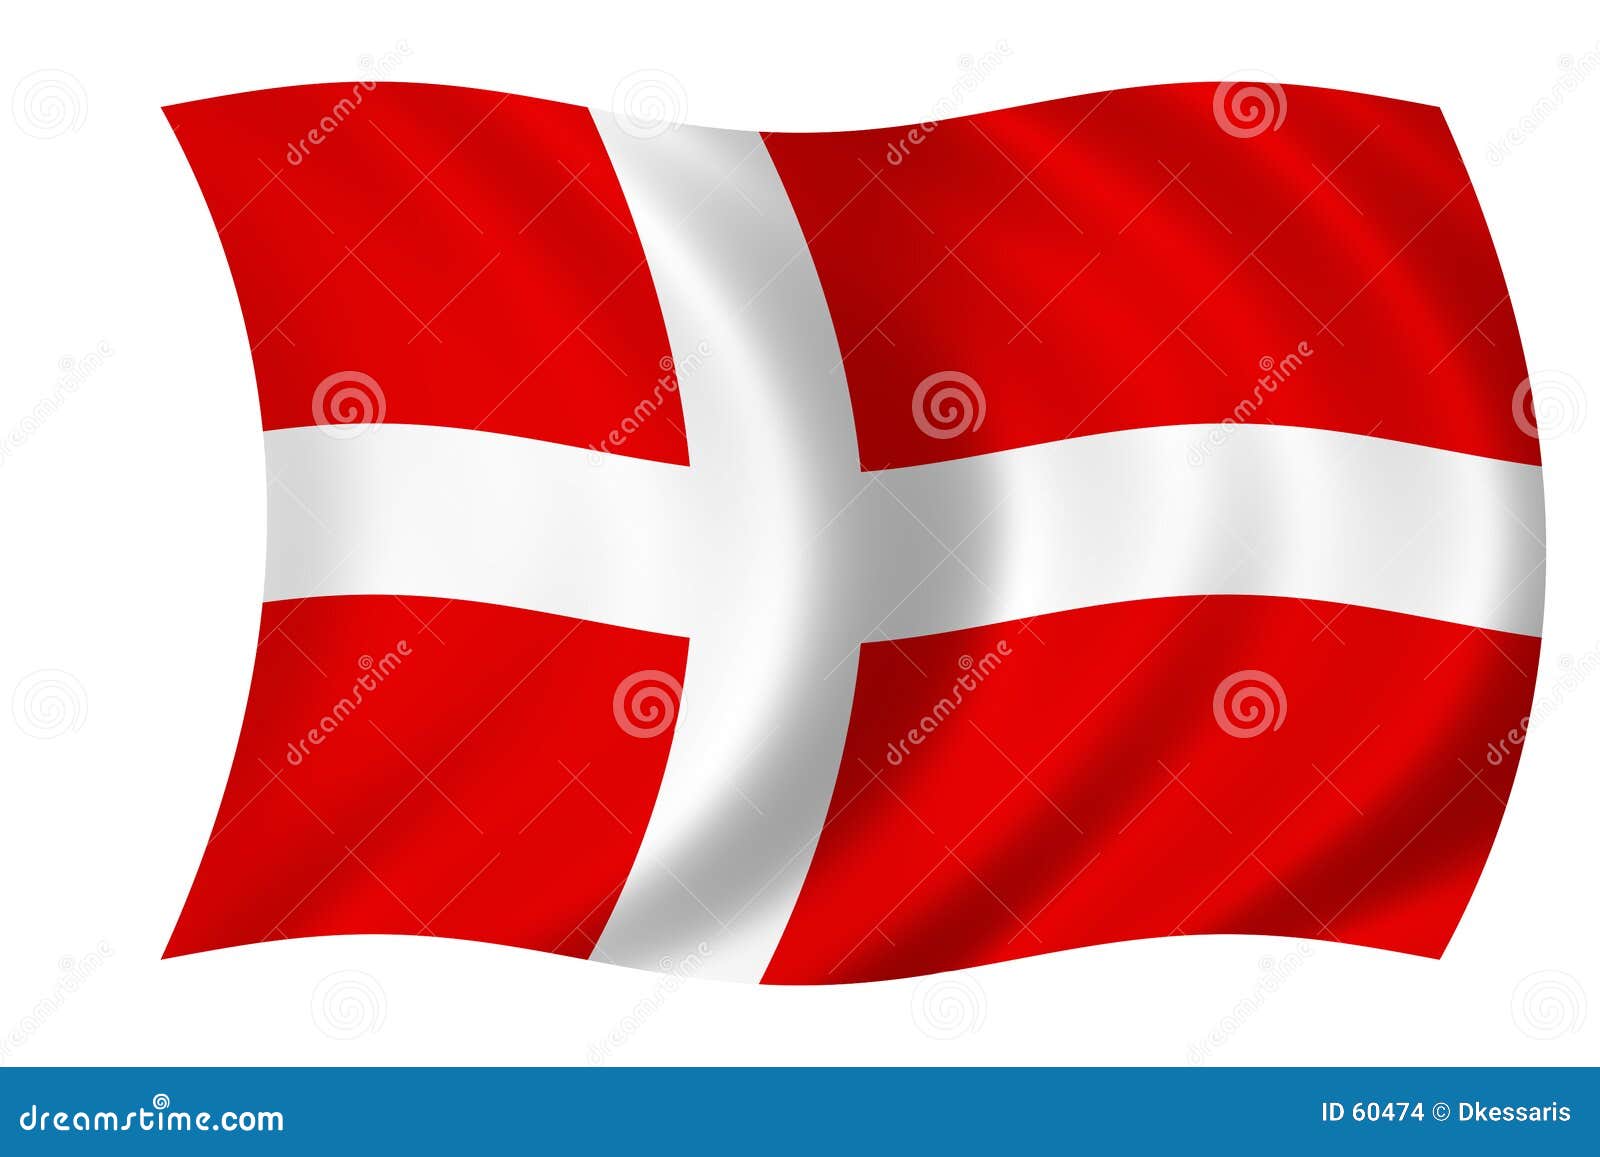 clipart flag danmark - photo #42